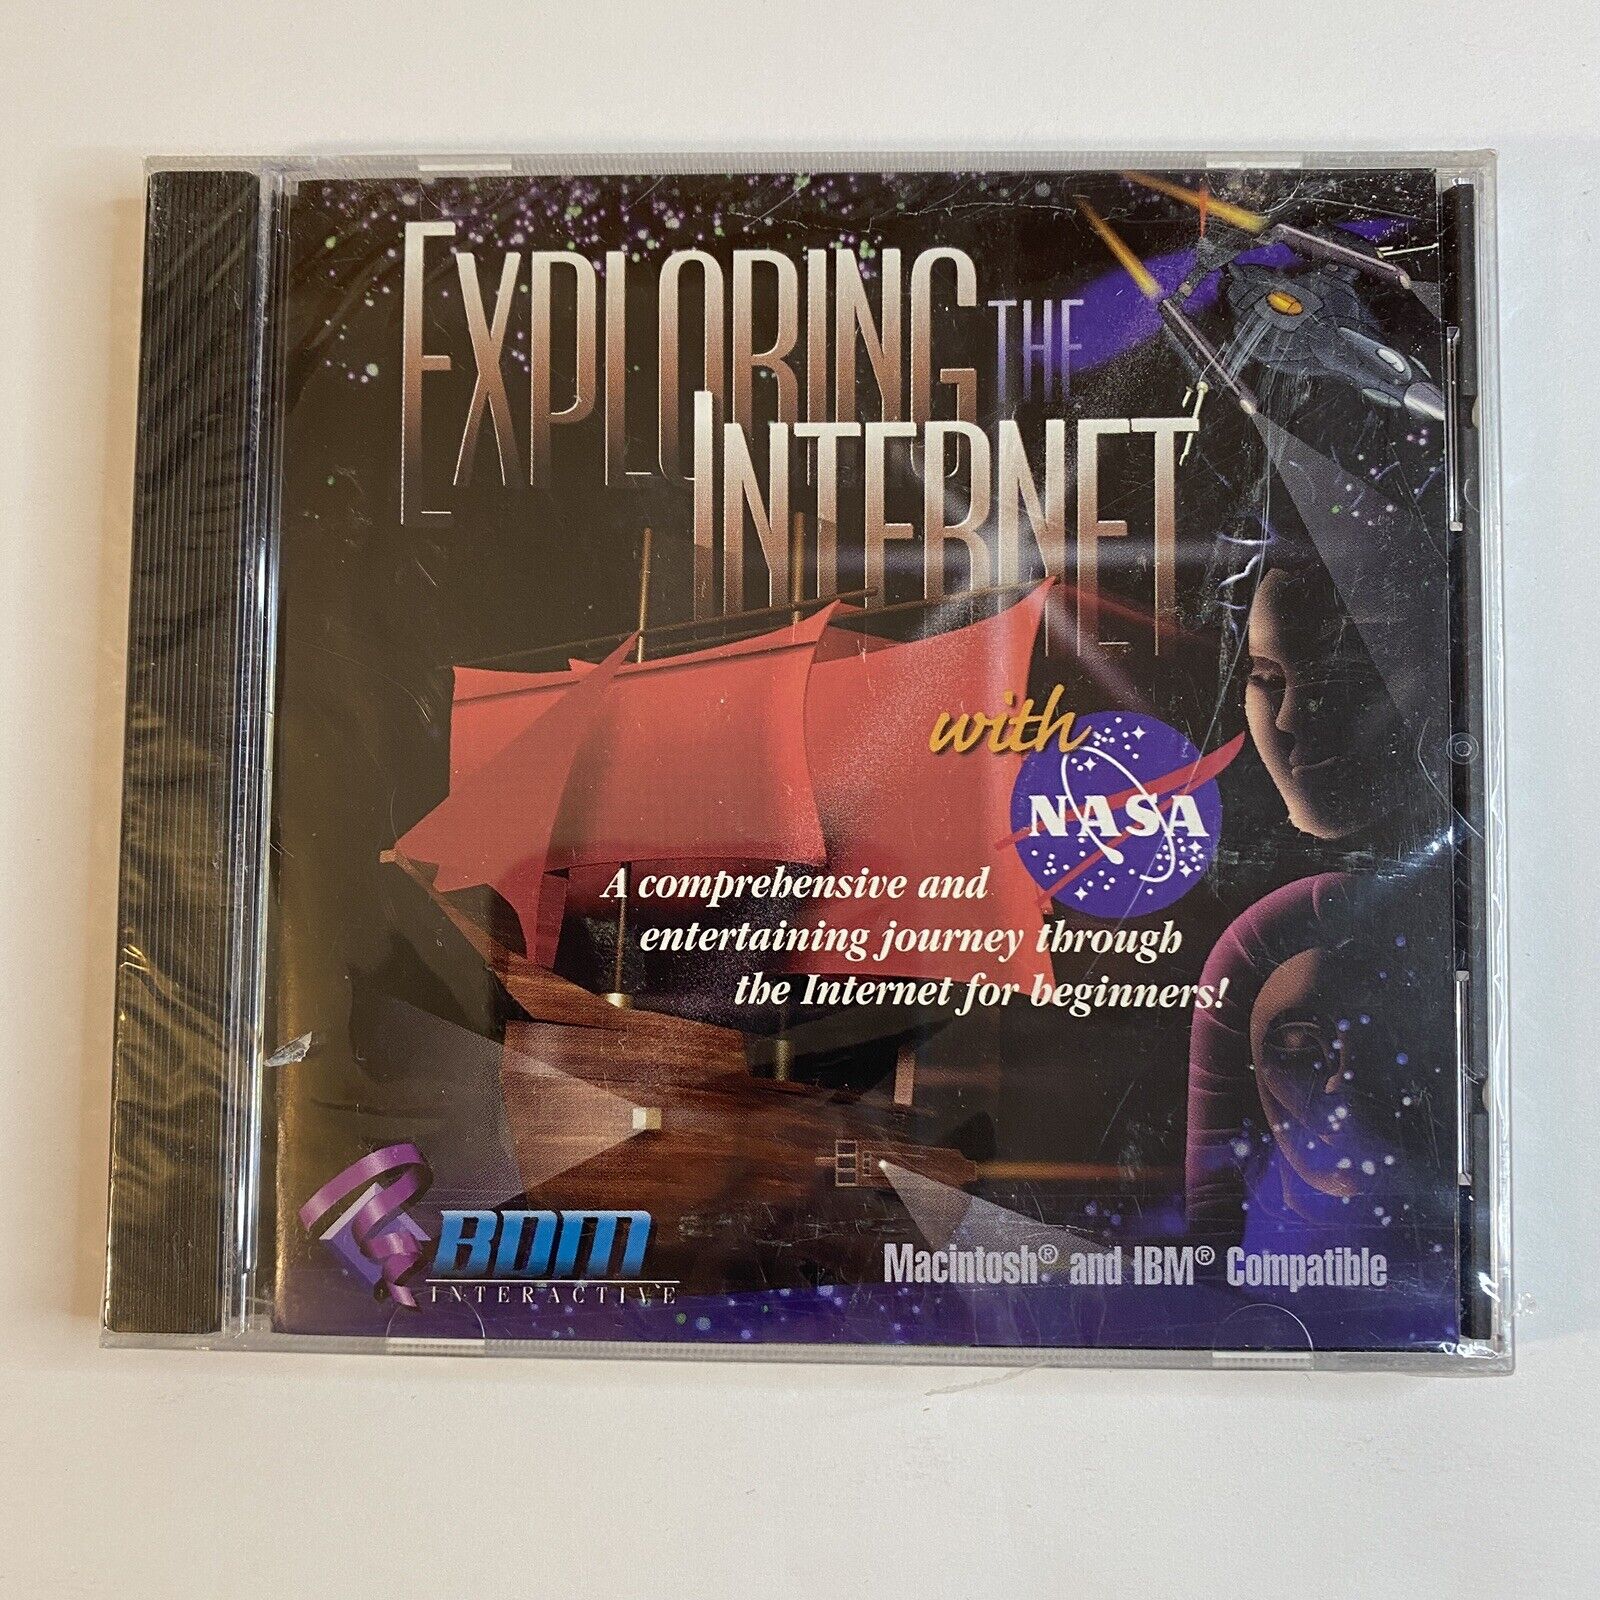 Exploring The Internet with NASA (CD-ROM, 1997, BDM Interactive) Macintosh IBM